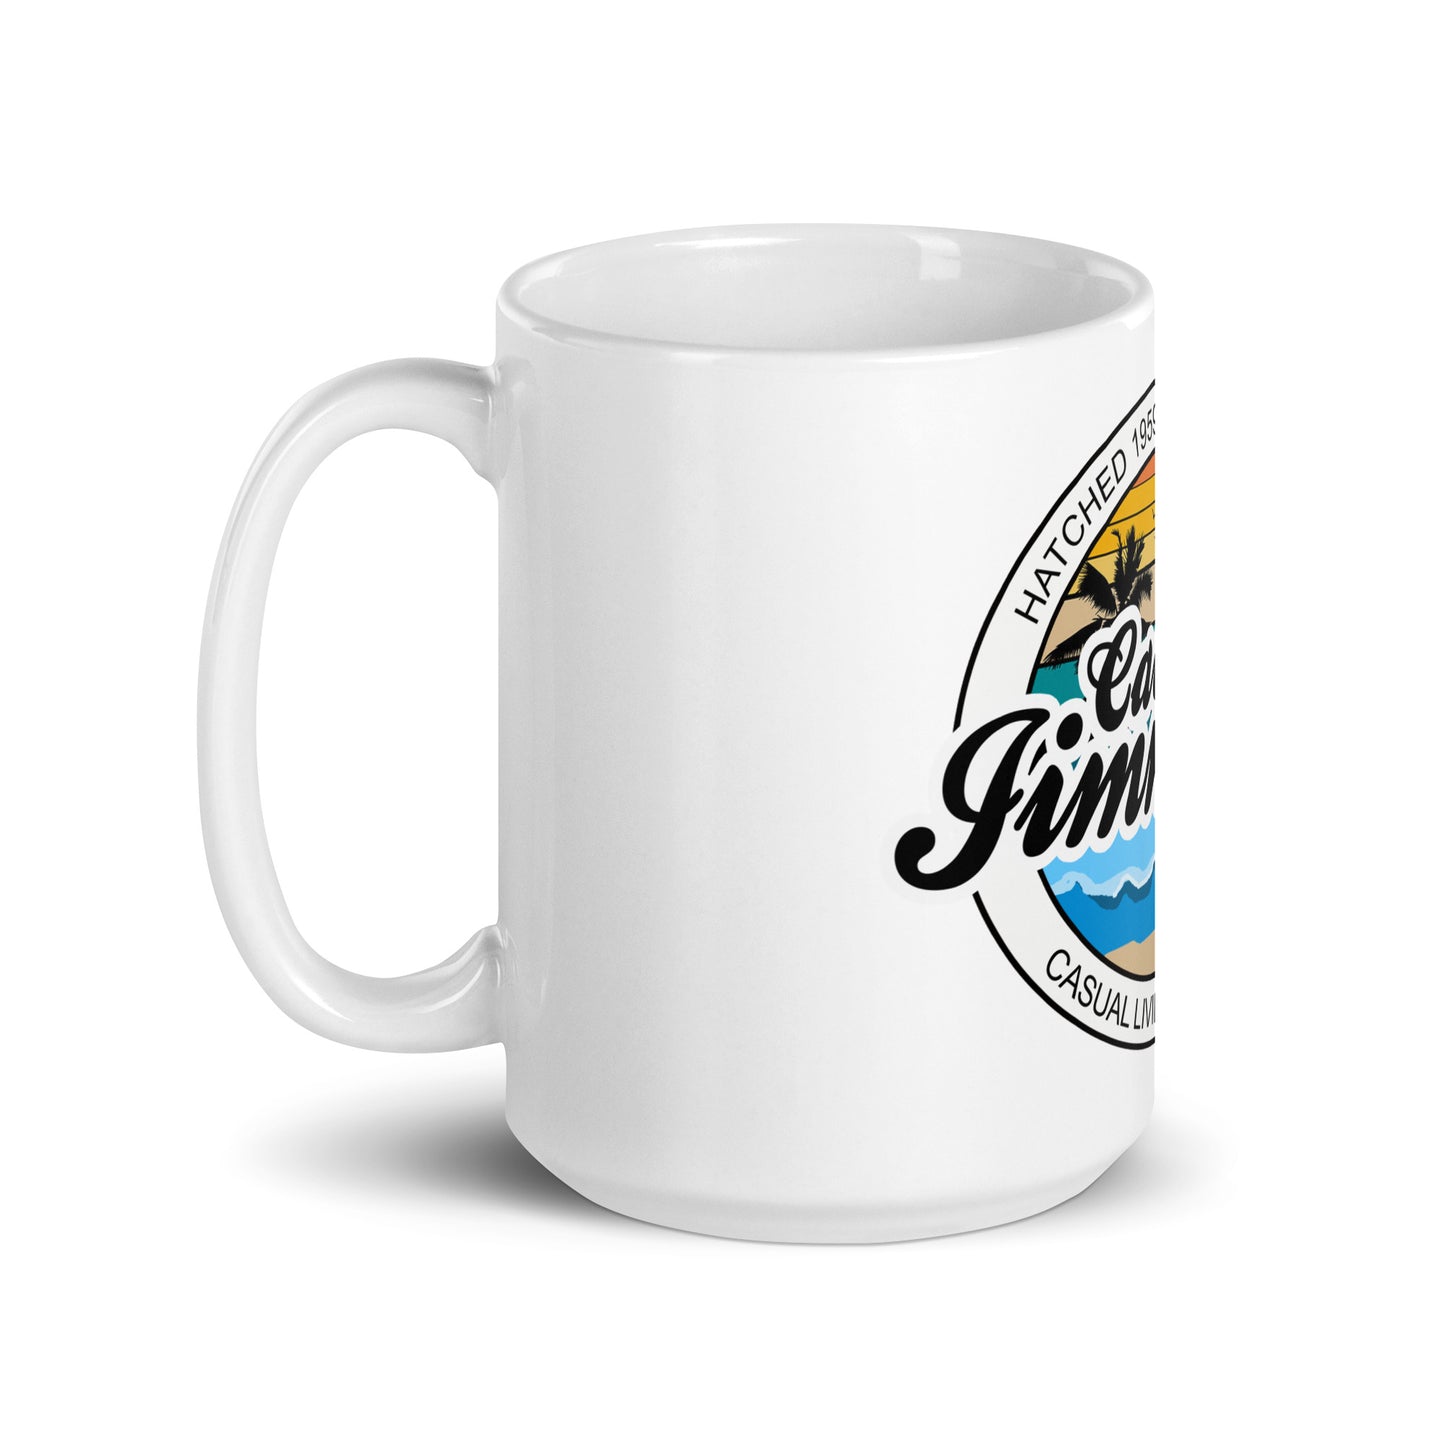 Cabo Jimmy White glossy mug